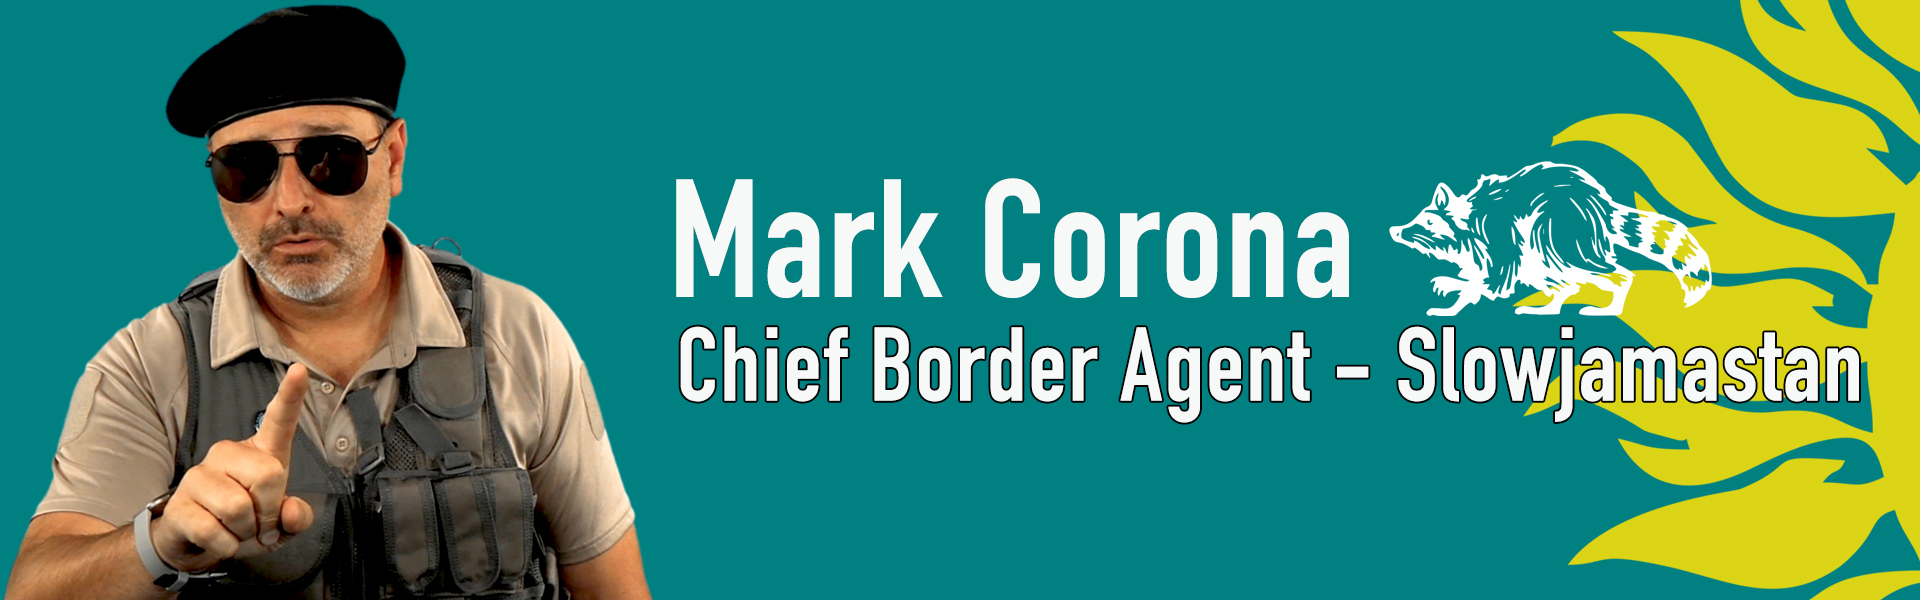 Chief Border Agent